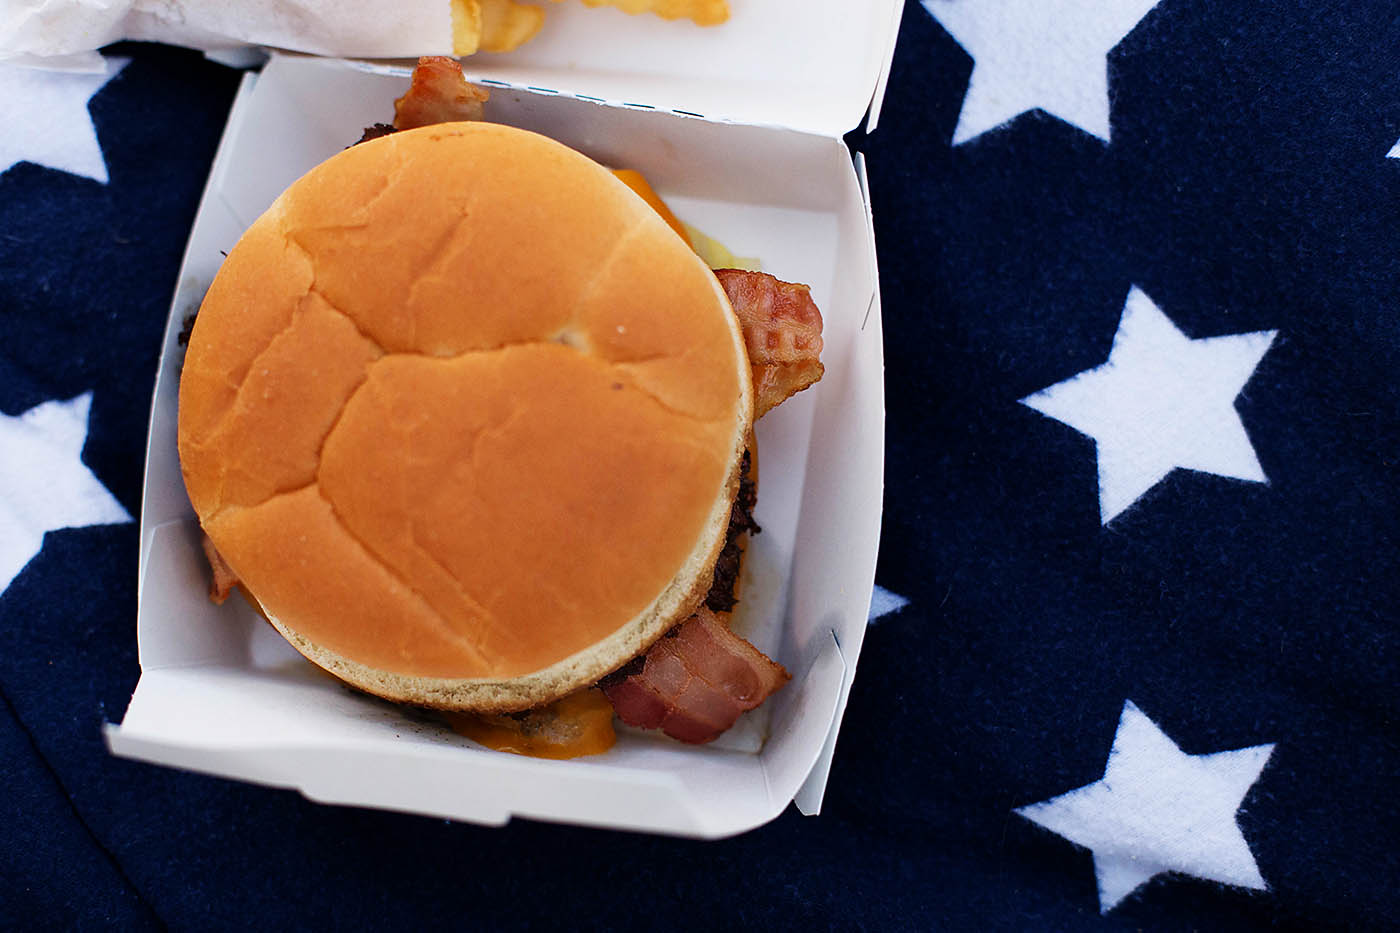 Celebrate National Hamburger Day with a fun hamburger printable game and Culver's